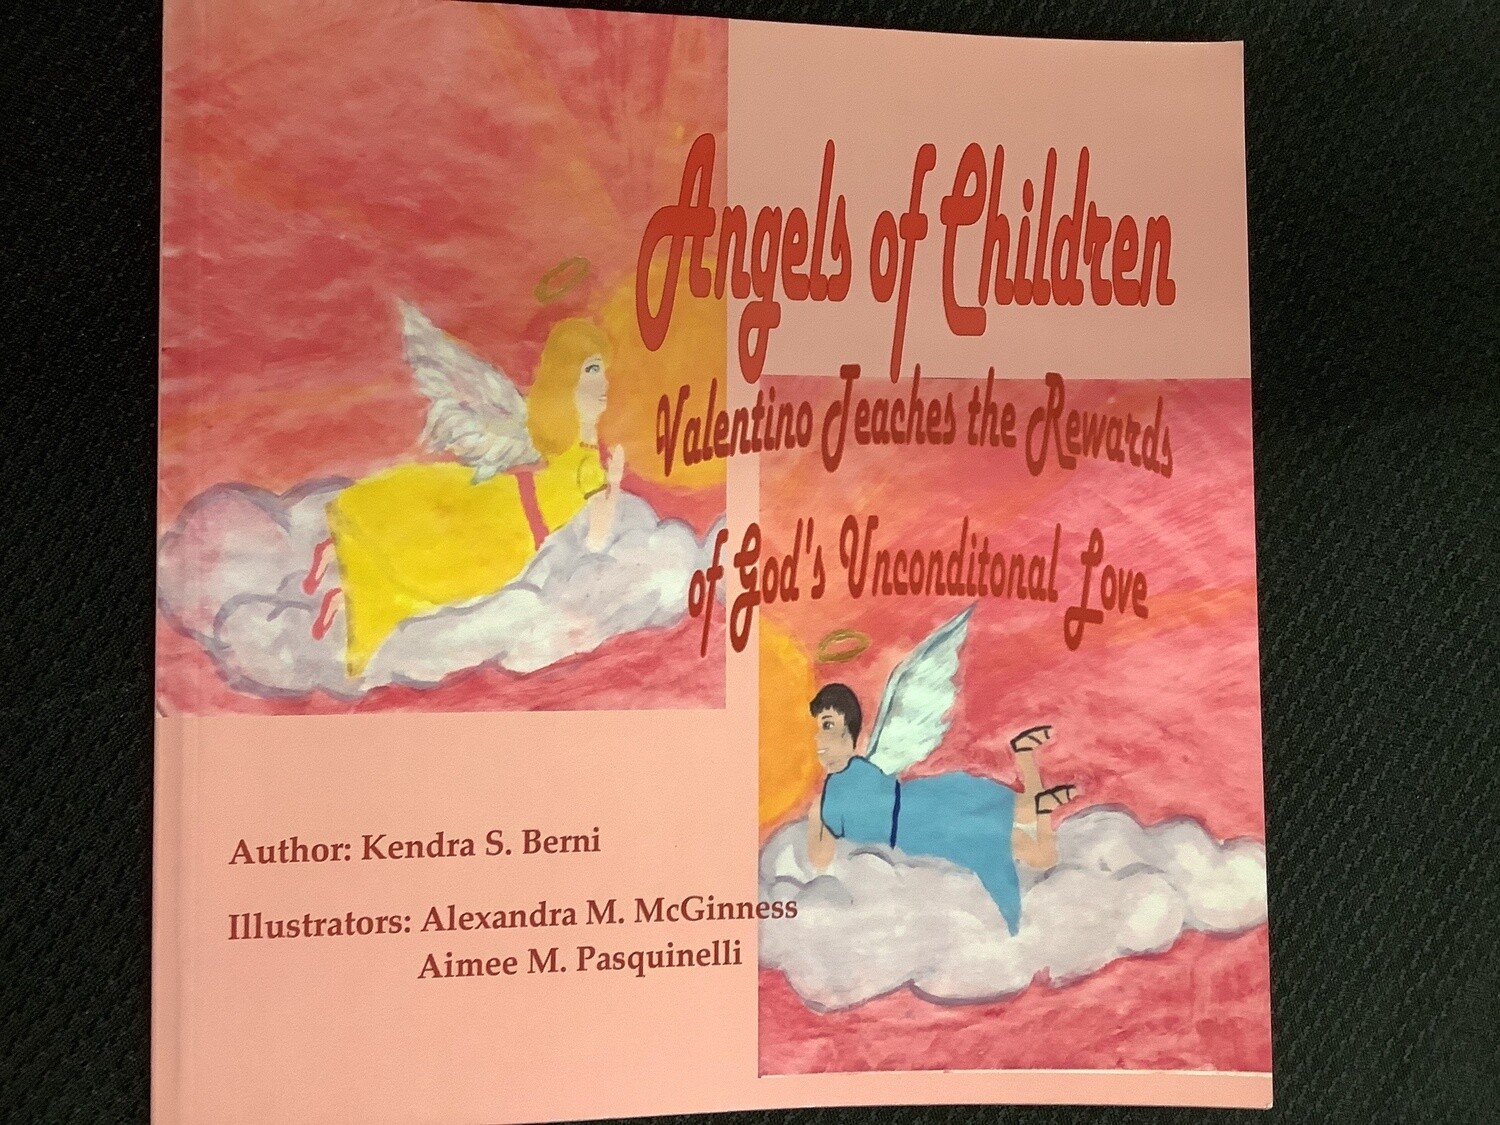 Angels Of Children Valentino Teaches the Rewards of God’s Unconditional Love - Kendra S. Berni, Alexandra M. McGinness, Aimee M. Pasquinelli